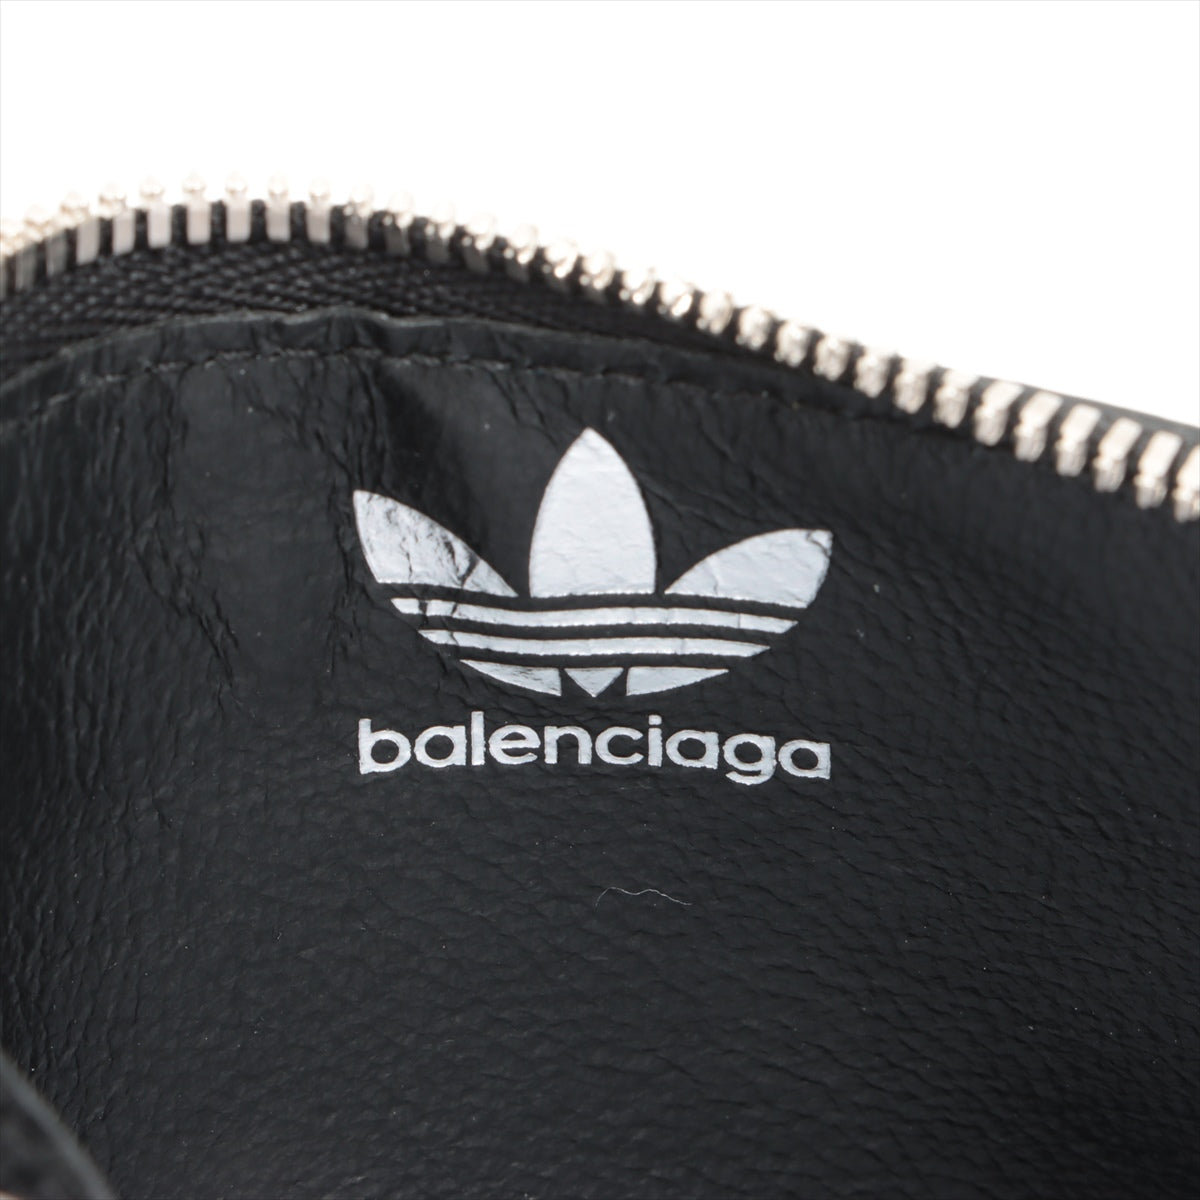 Balenciaga x adidas Leather Black 721896